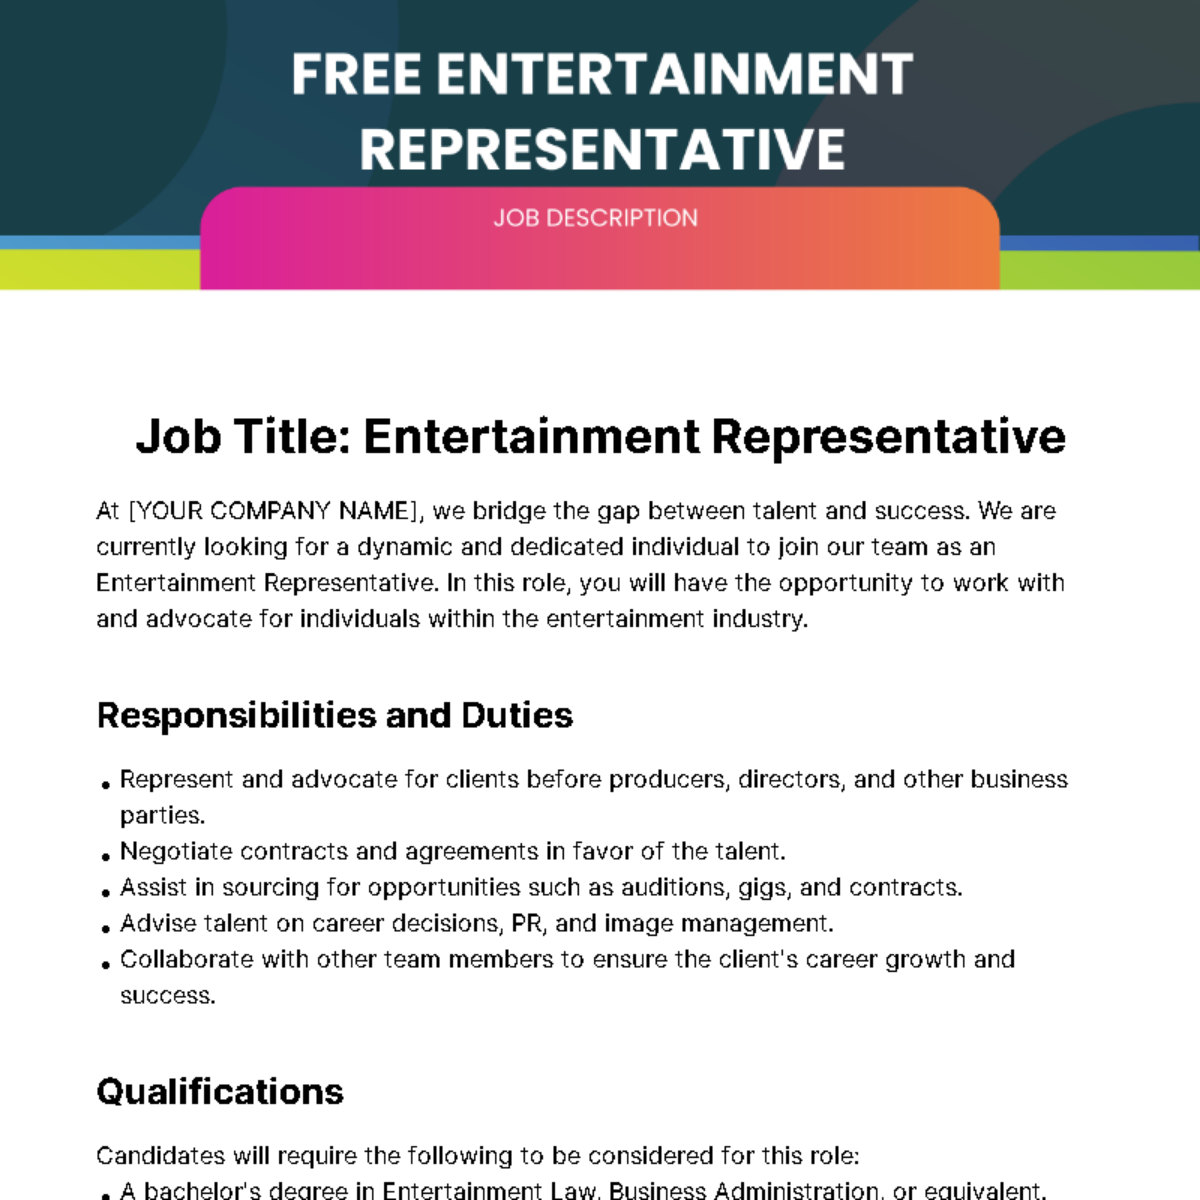 Free Entertainment Representative Job Description Template